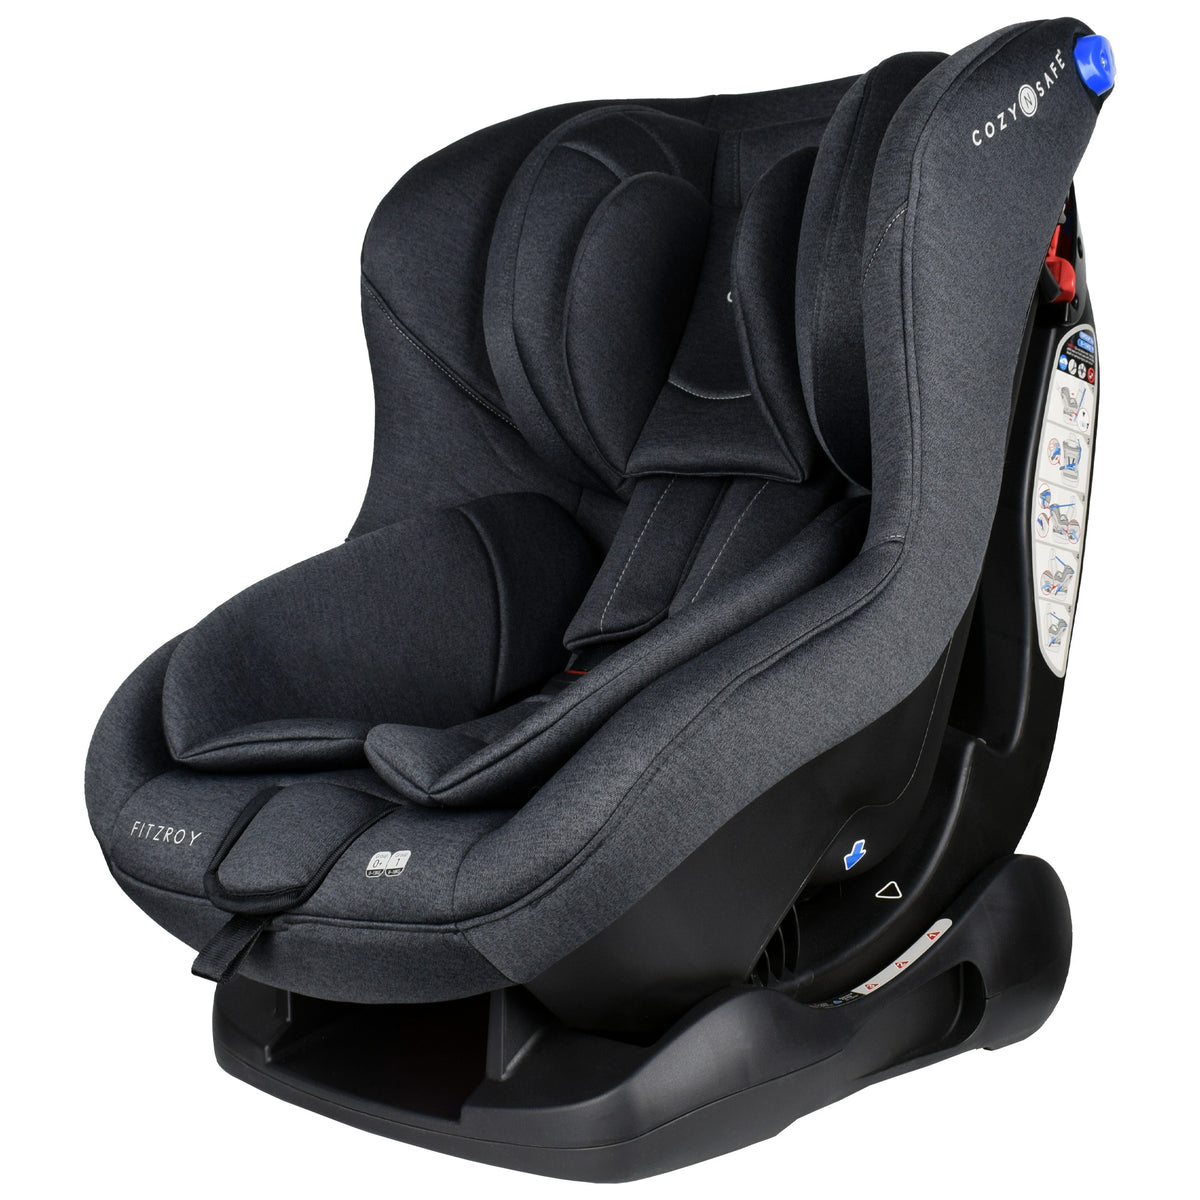 Fitzroy Group 0+/1 Child Car Seat - Graphite